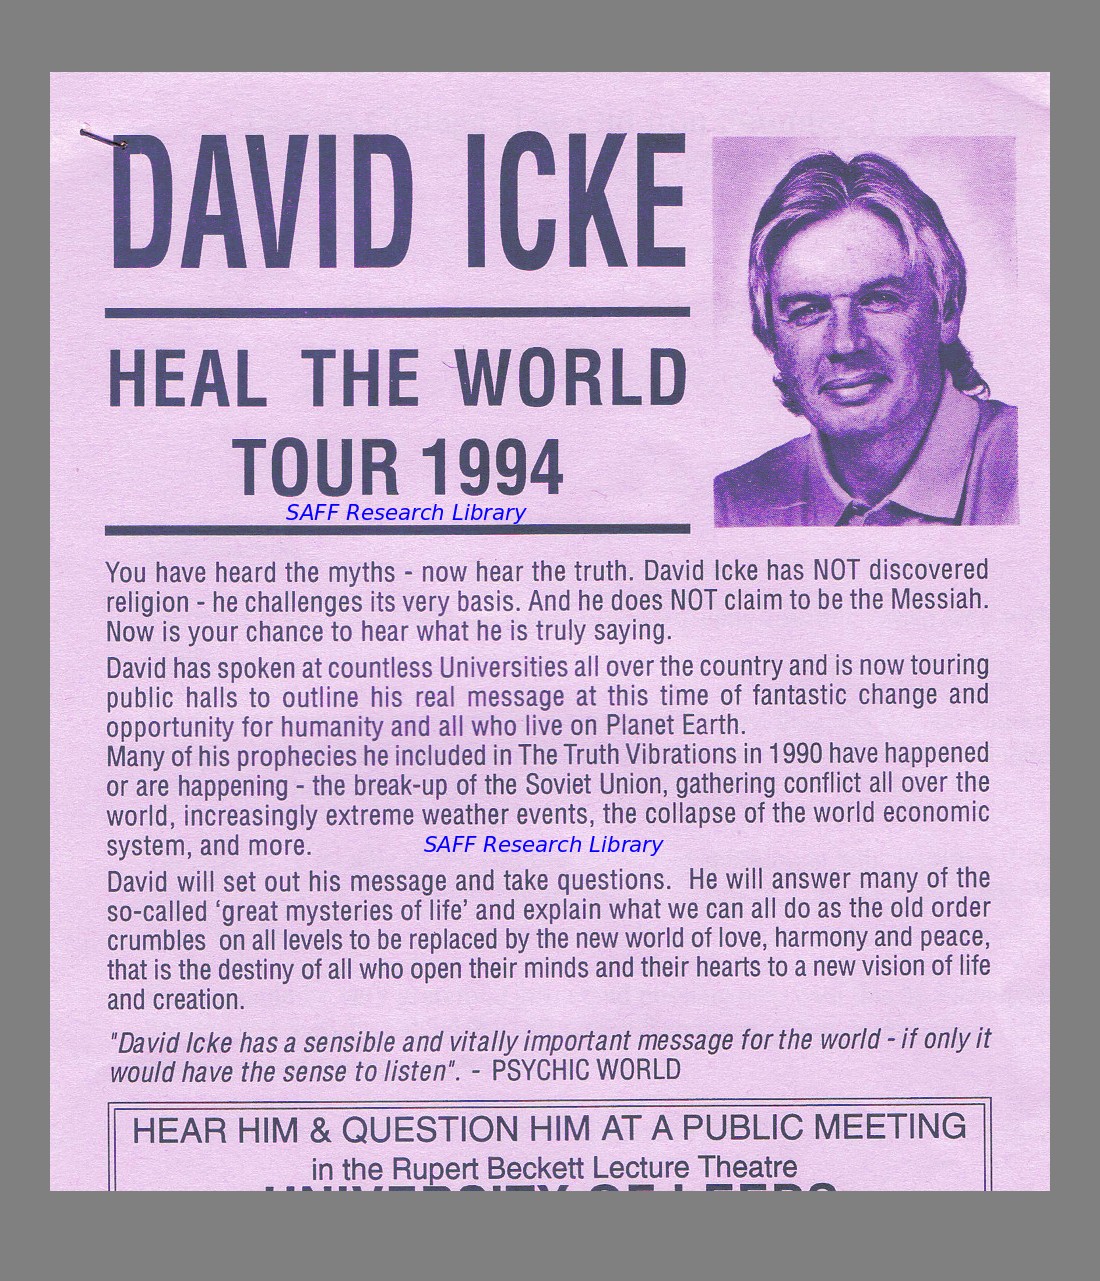 David Icke's 1994 Tour Heal The World